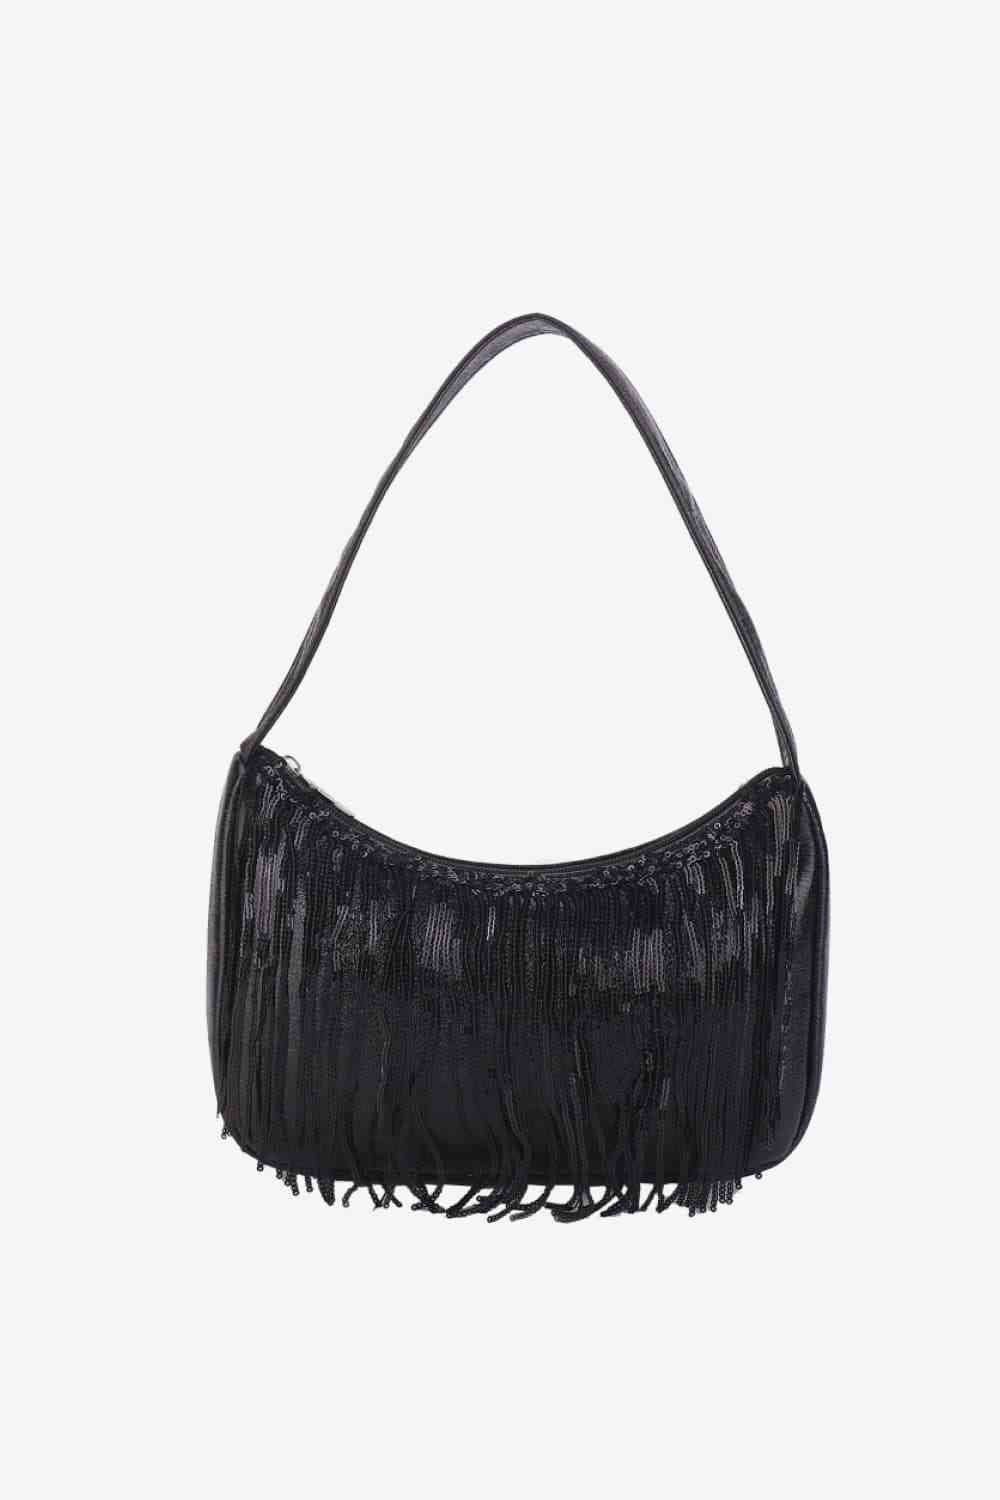 Fringe Detail Handbag - Black / One Size - Women Bags & Wallets - Handbags - 5 - 2024